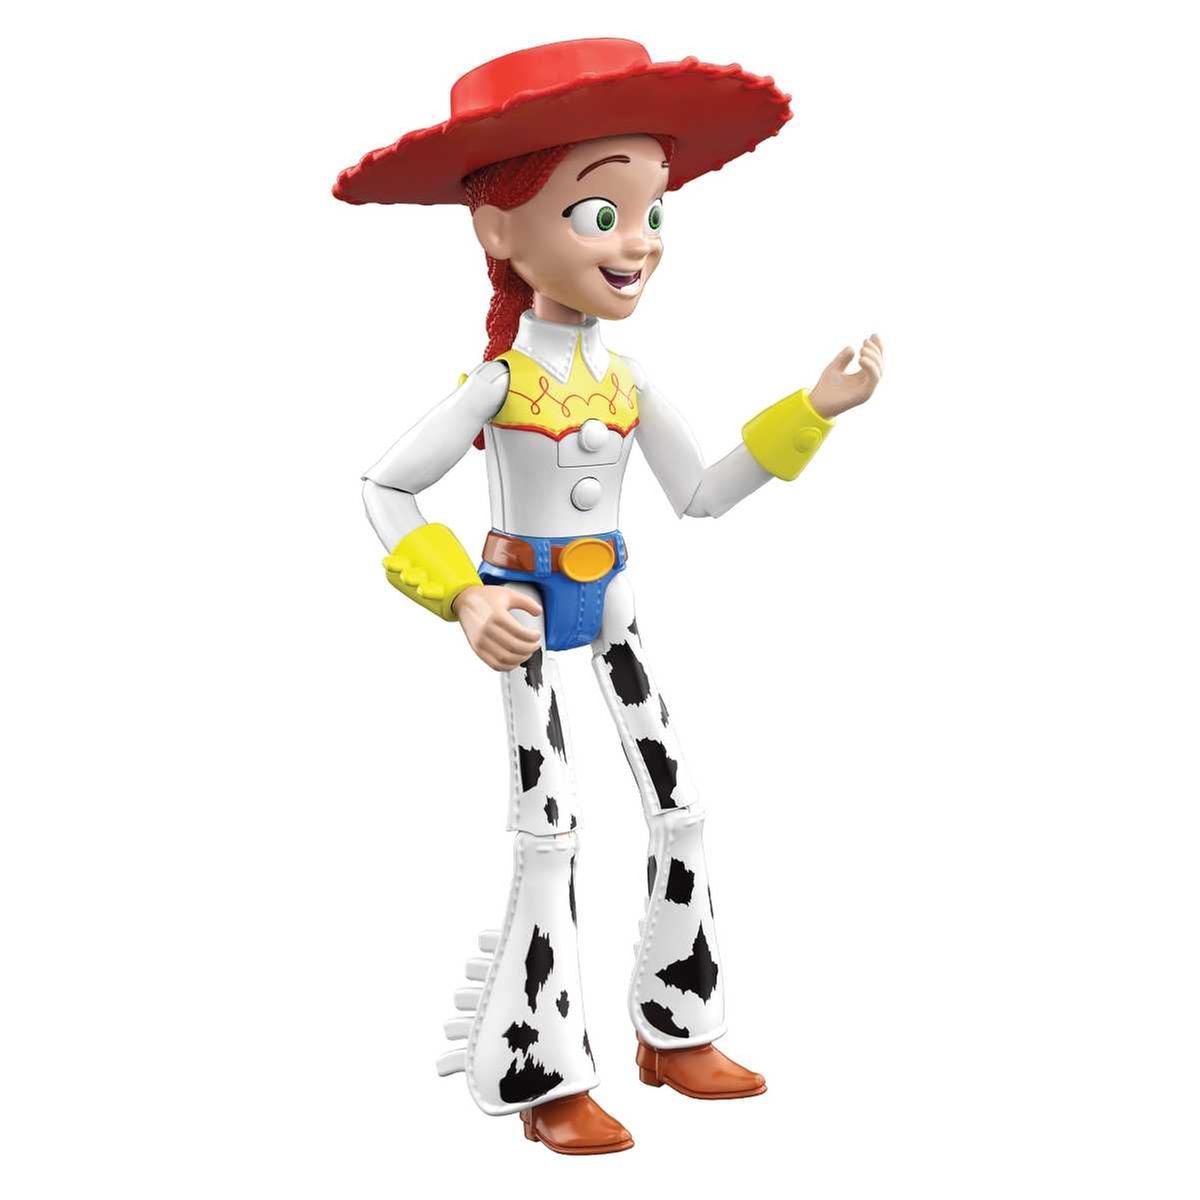 Toy Story - Figura interactiva Jessie | Misc Action Figures | Toys"R"Us  España